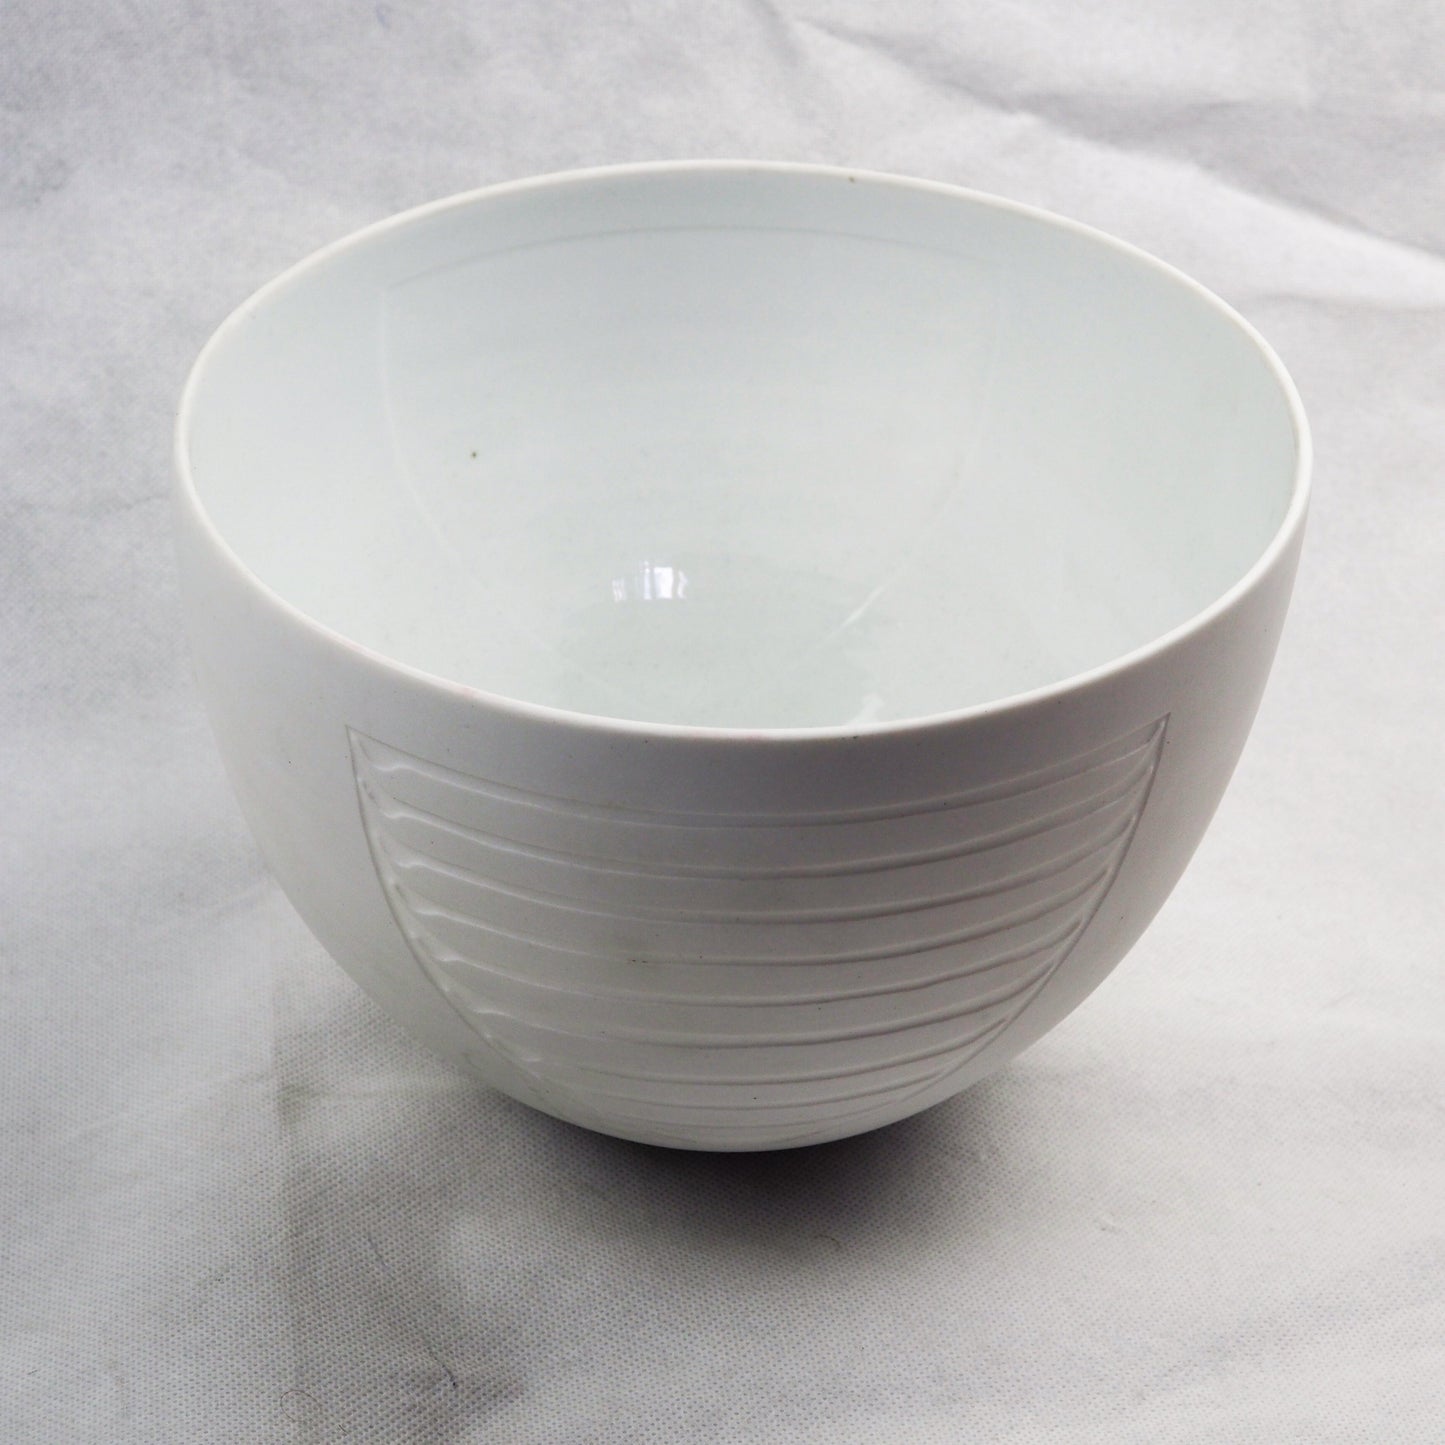 Les Blakebrough – Medium Porcelain Bowl | Les Blakebrough | Primavera Gallery